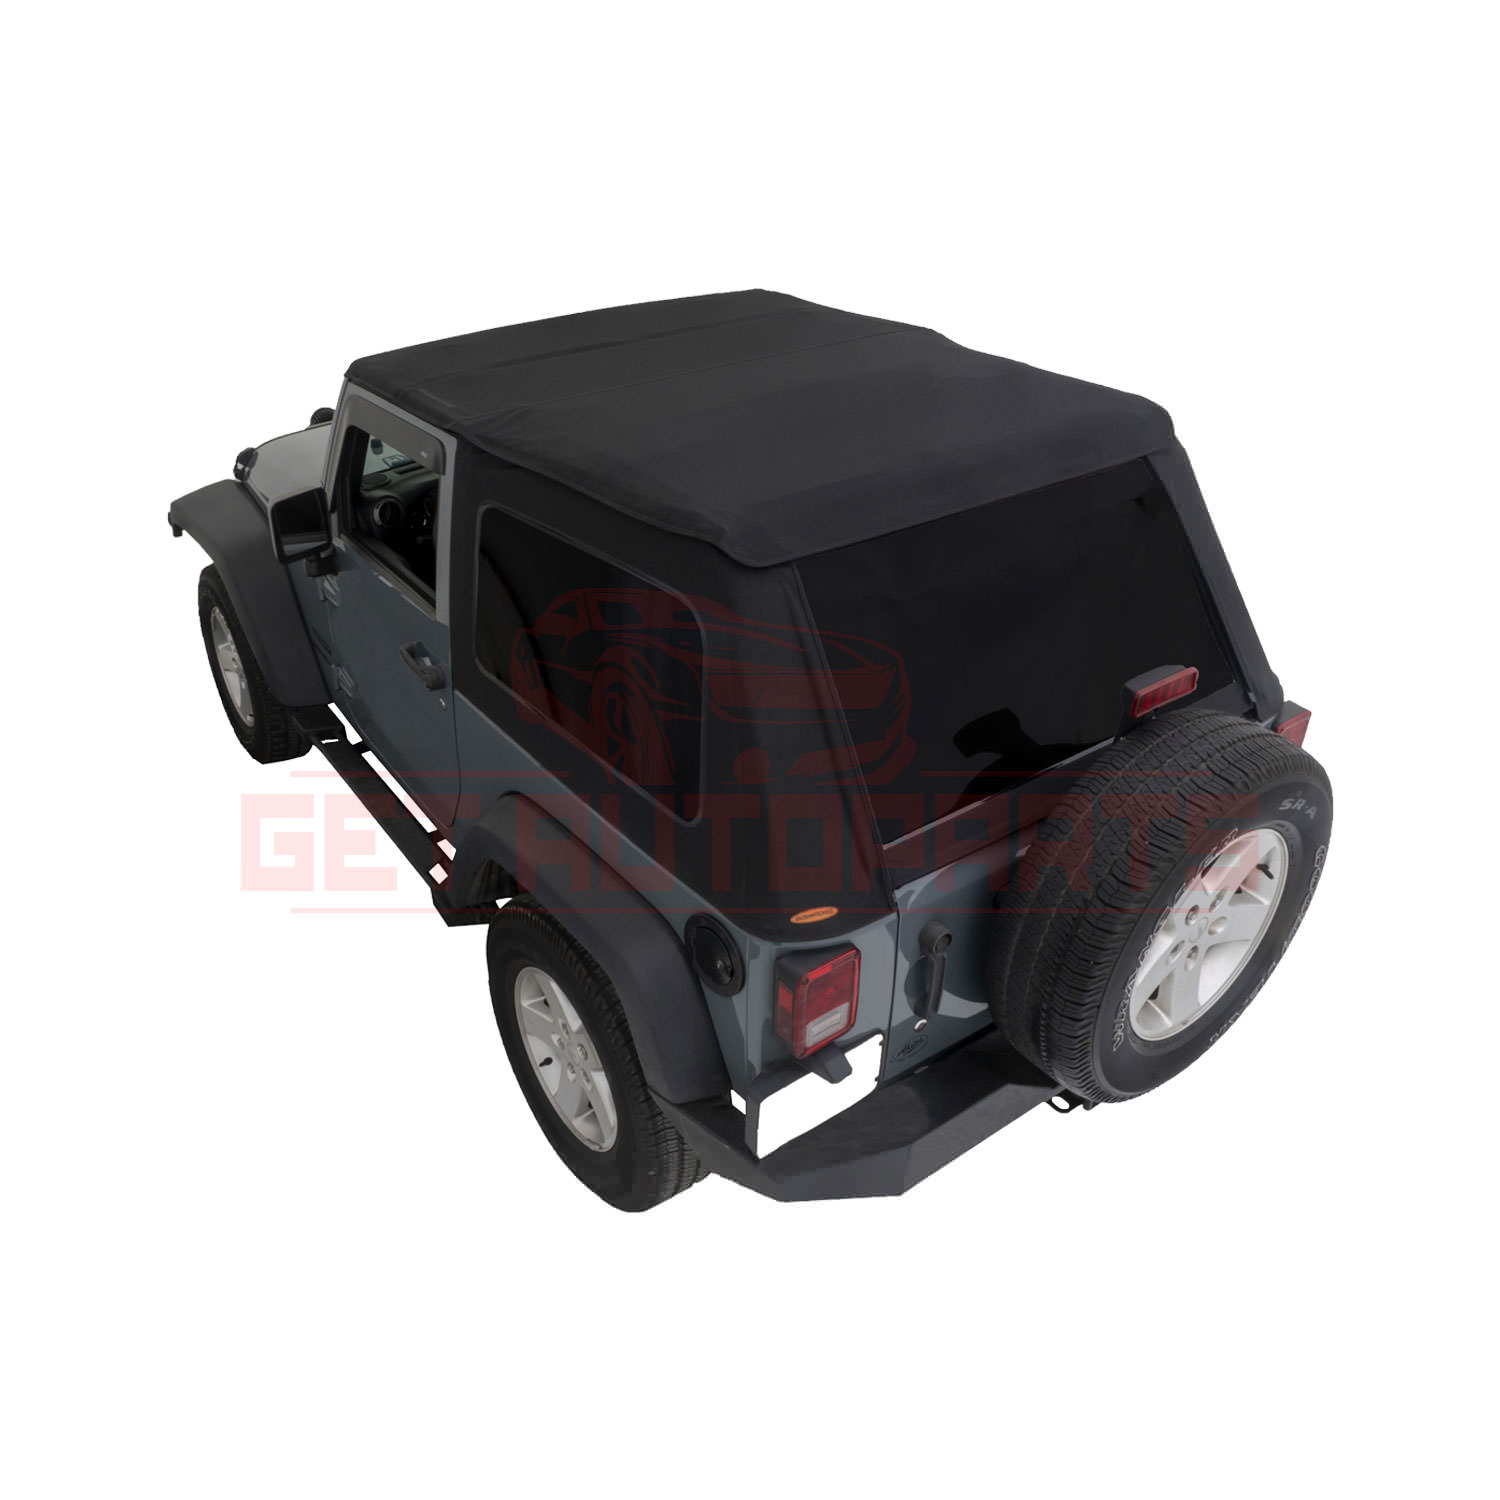 Bushwacker Soft Top for Jeep Wrangler 2007-17 657896964086 | eBay